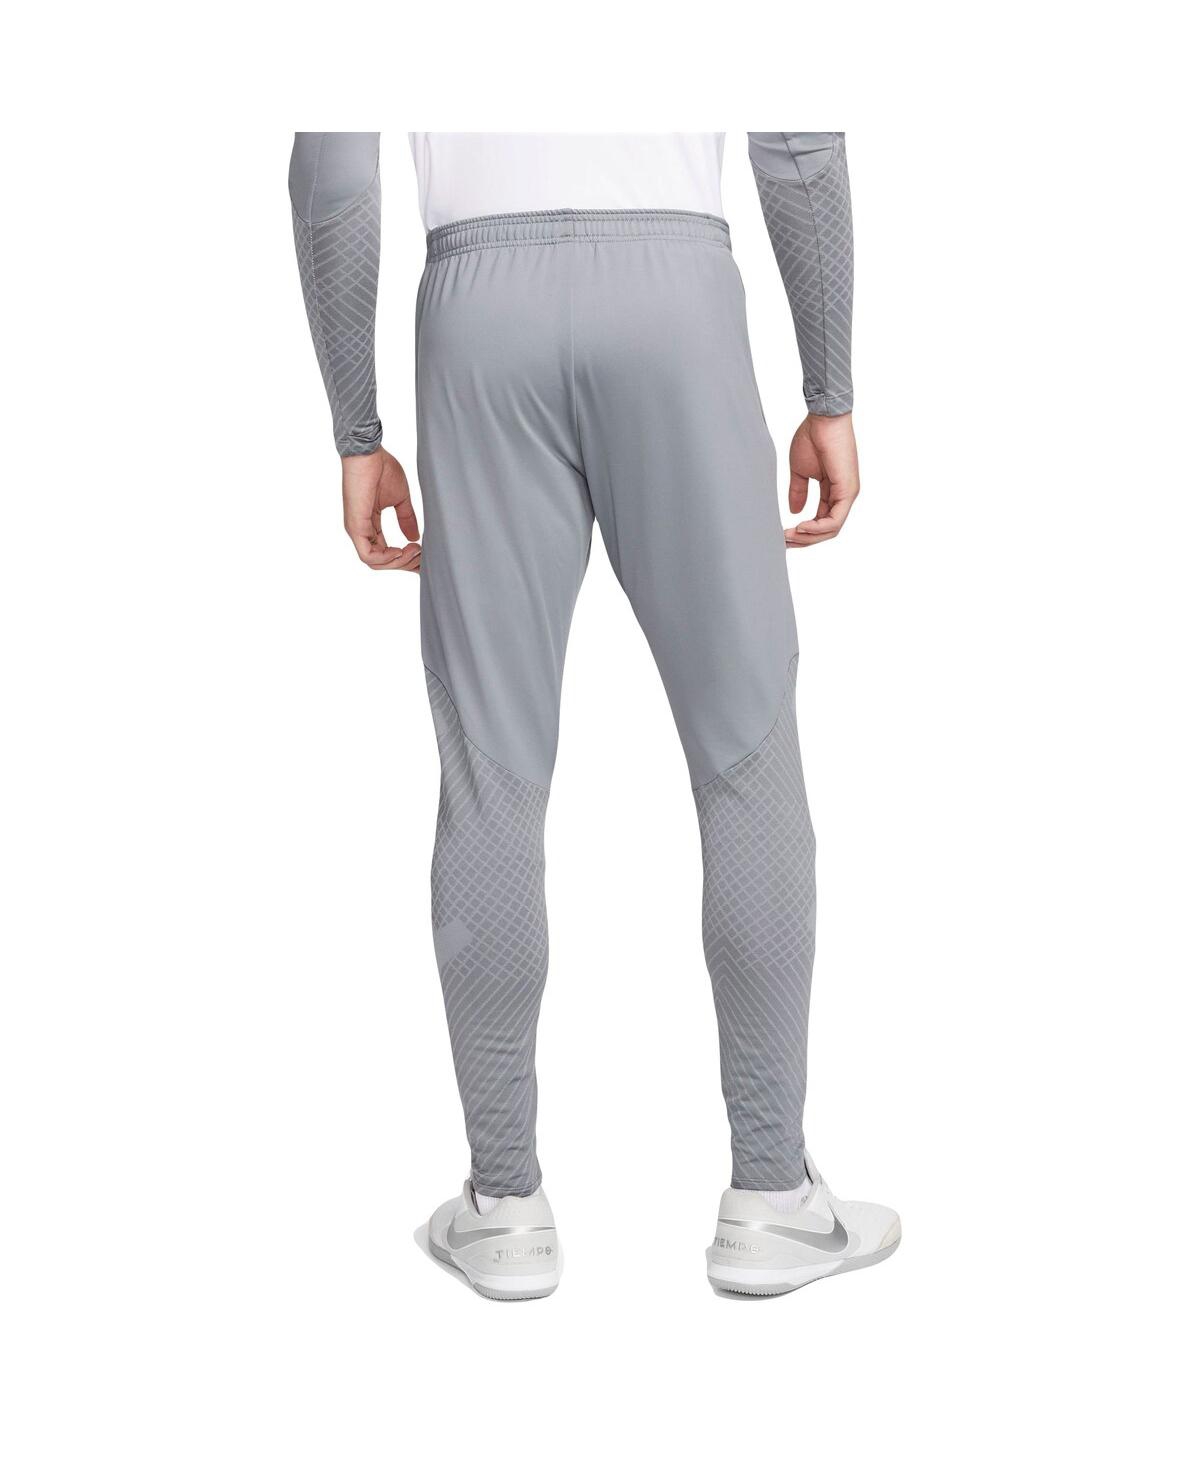 Shop Nike Men's  Gray Liverpool Strike Performance Training Pants